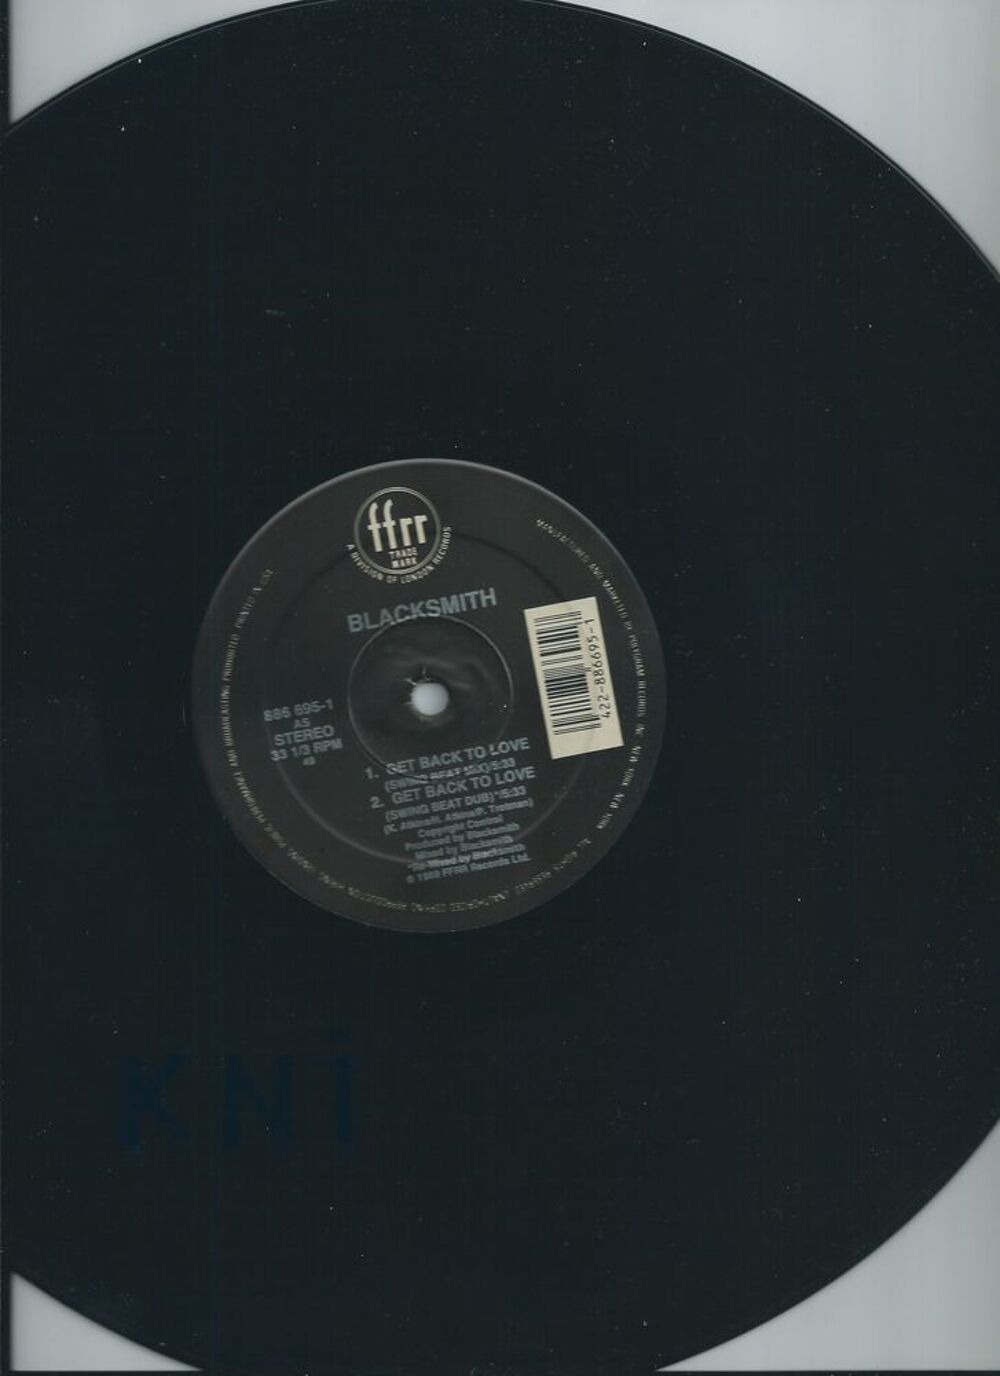 Vinyle 33T , Blacksmith 1989 CD et vinyles